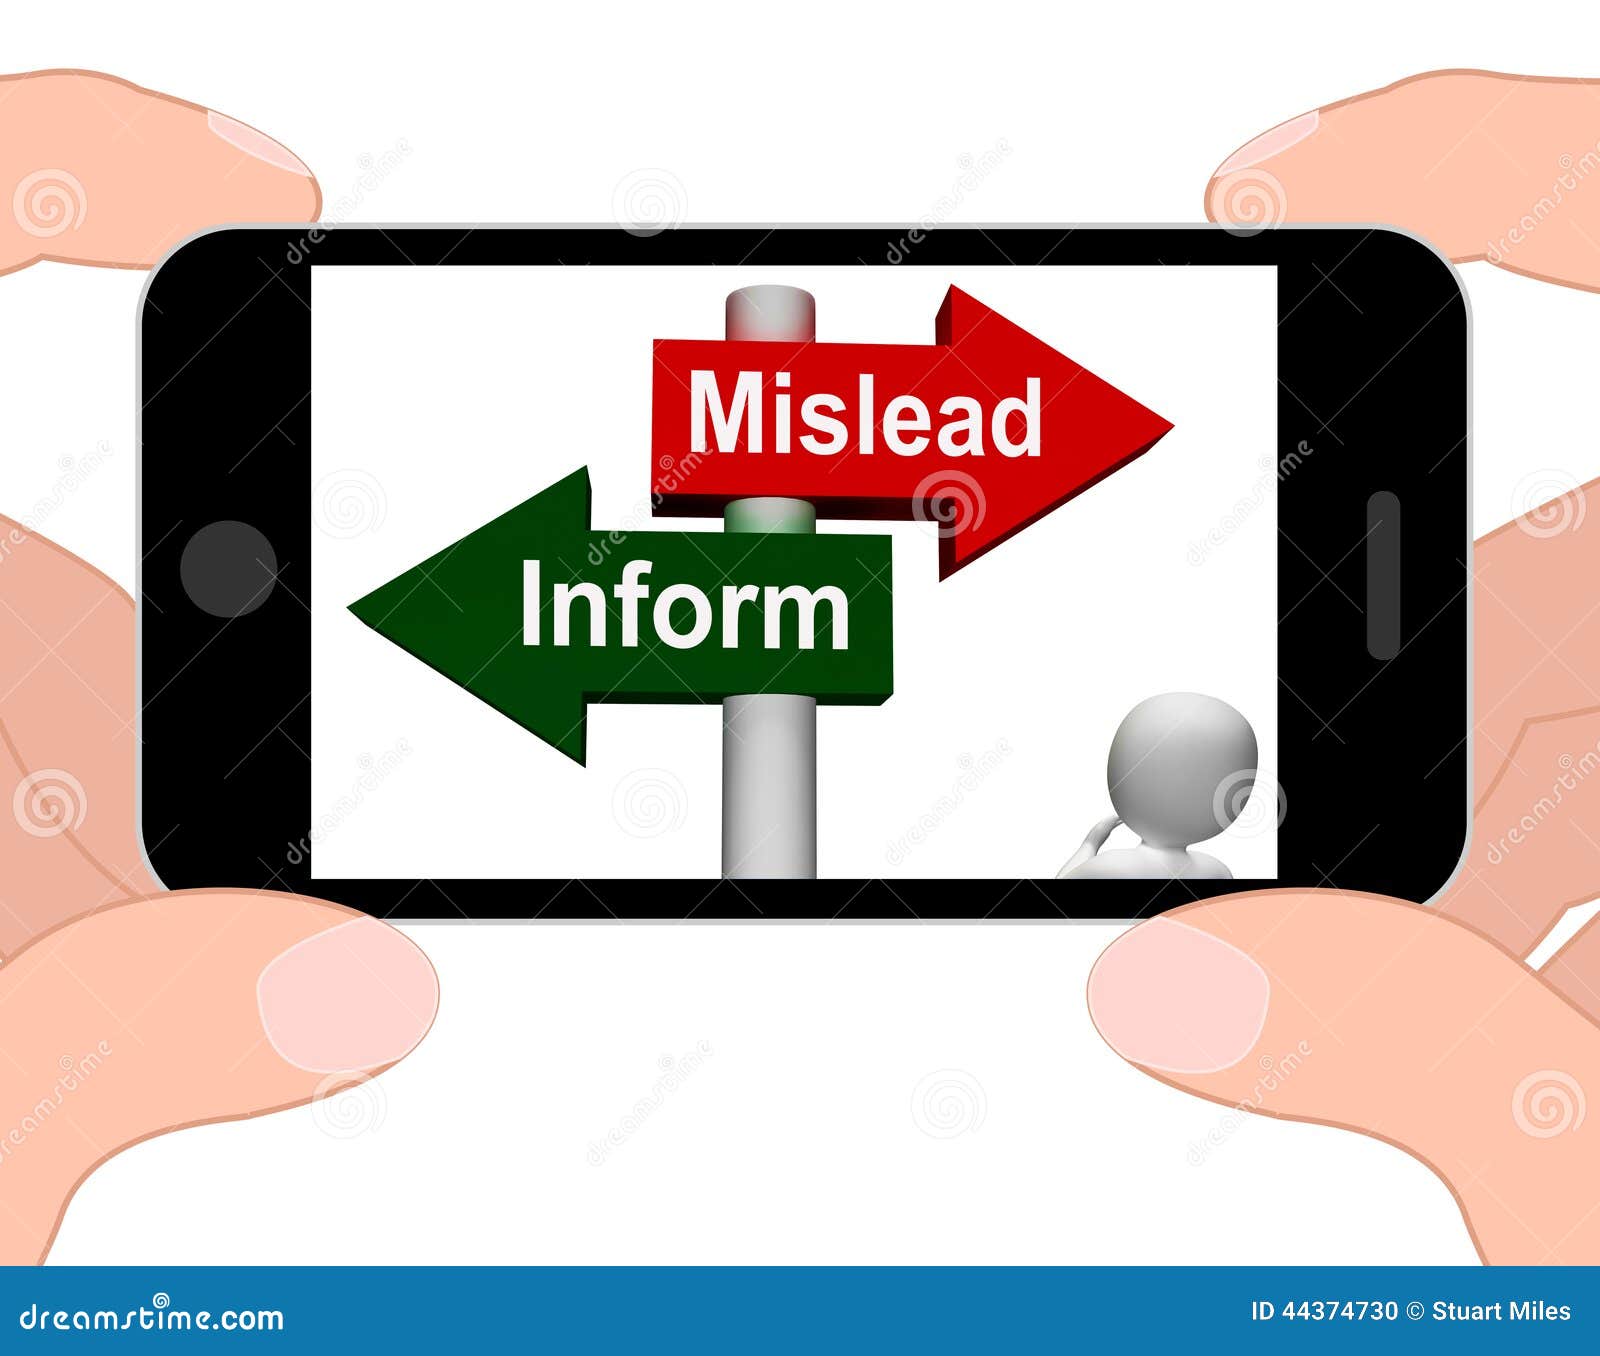 mislead inform signpost displays misleading or informative advice